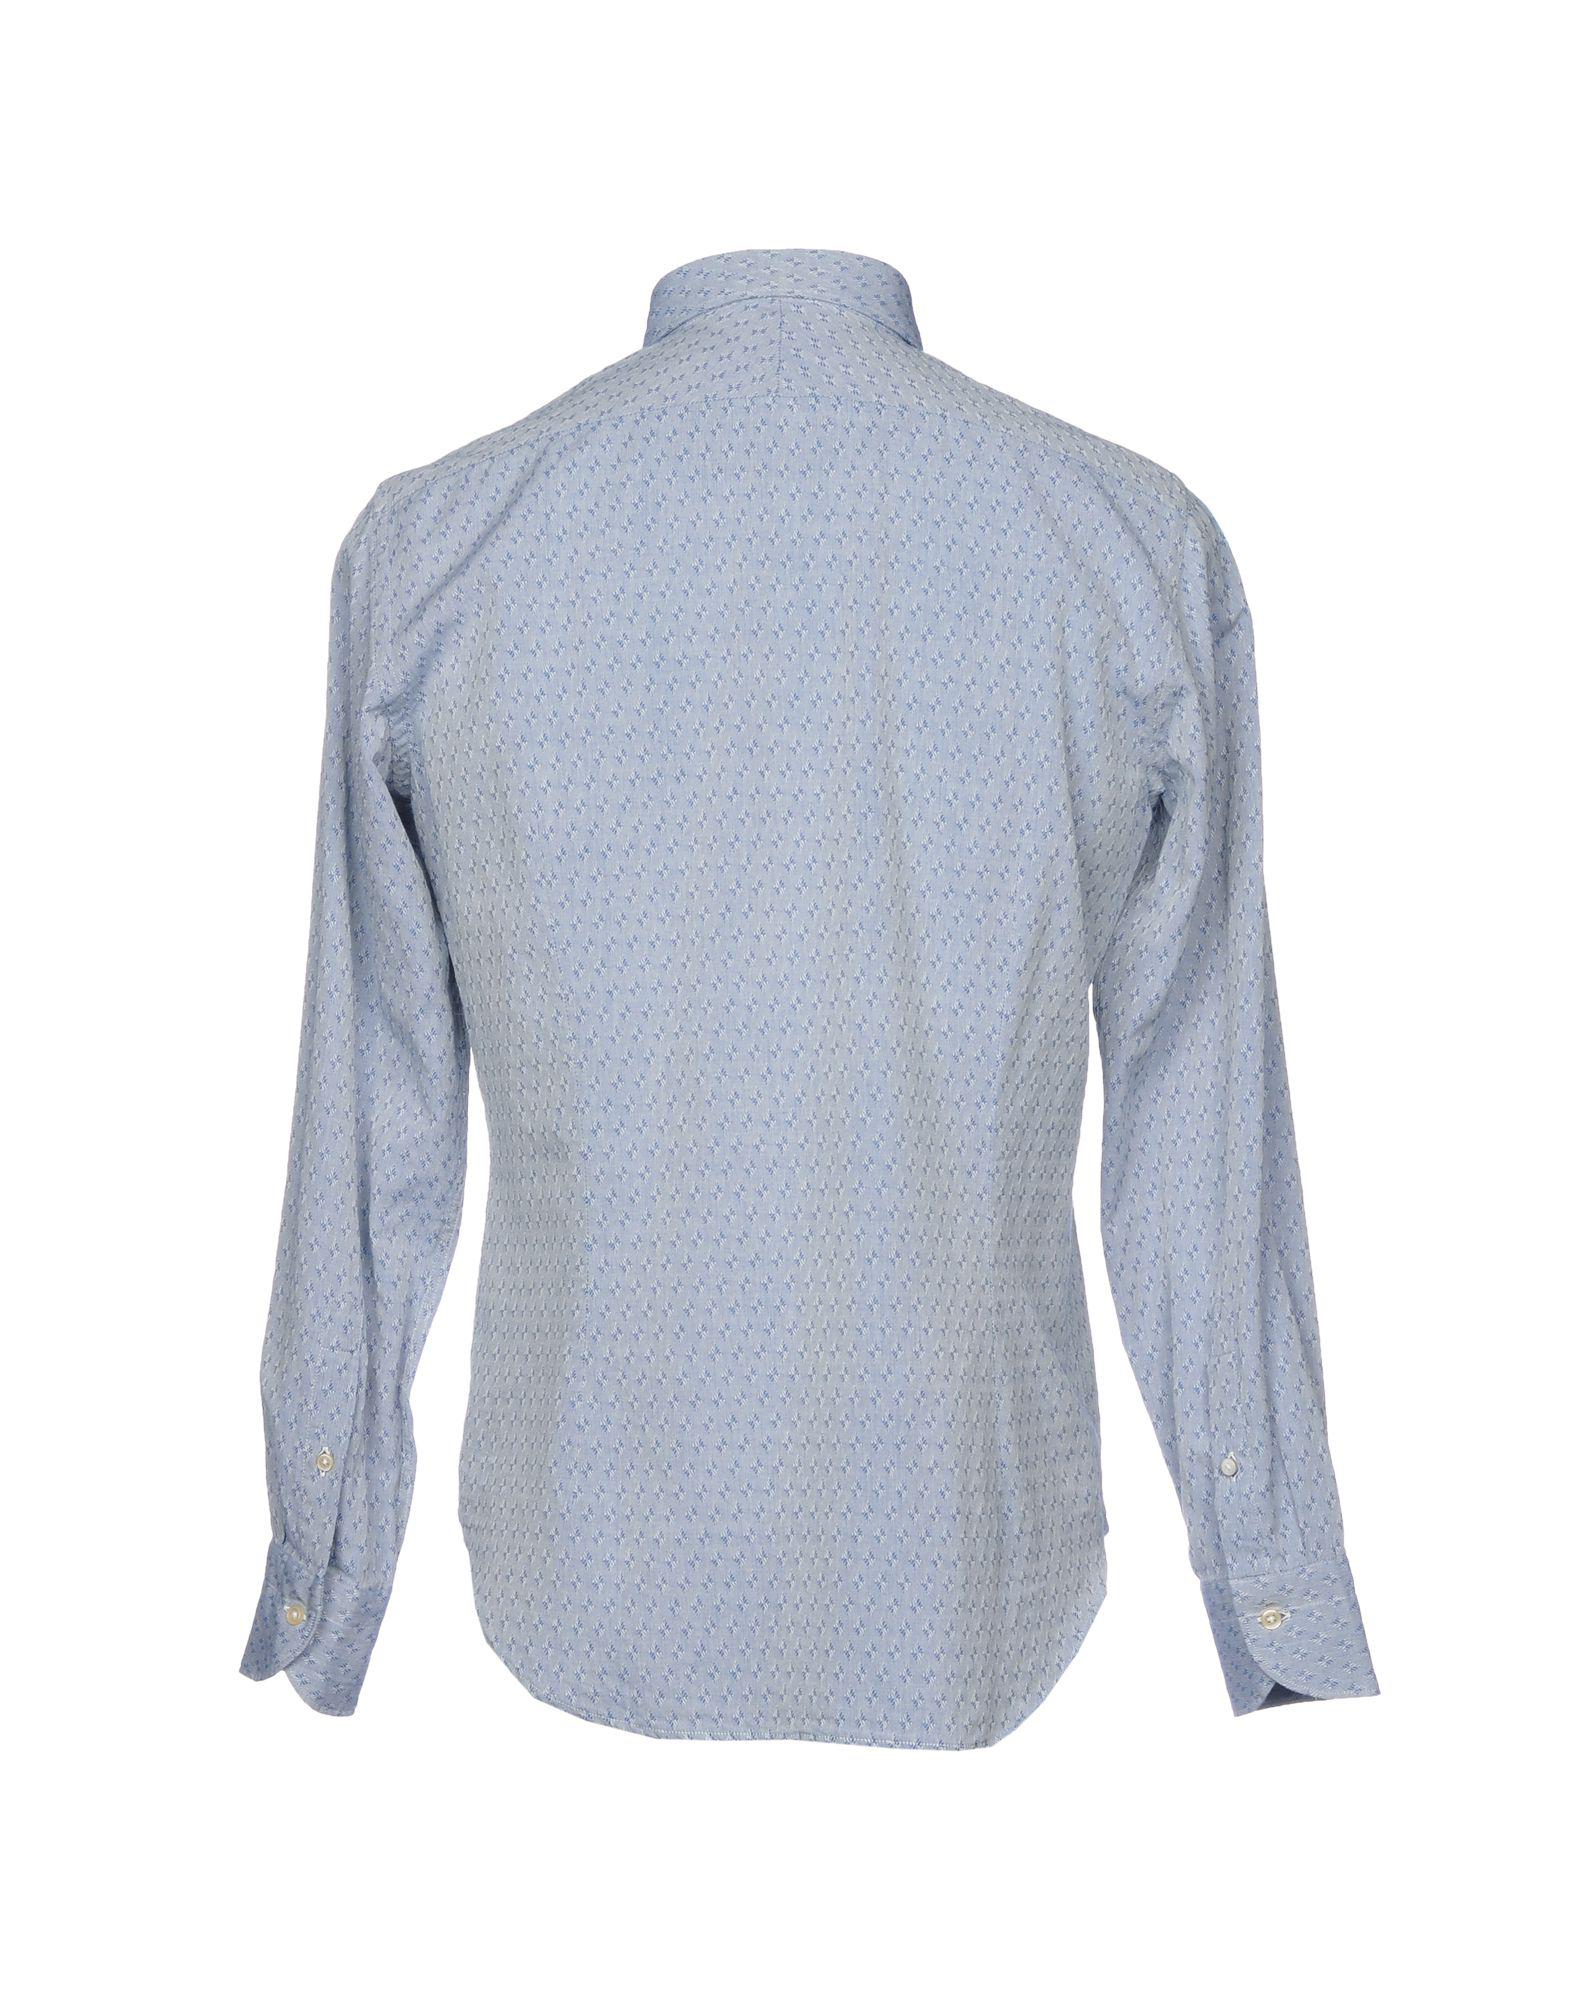 Caliban Cotton Shirt in Slate Blue (Blue) for Men - Lyst